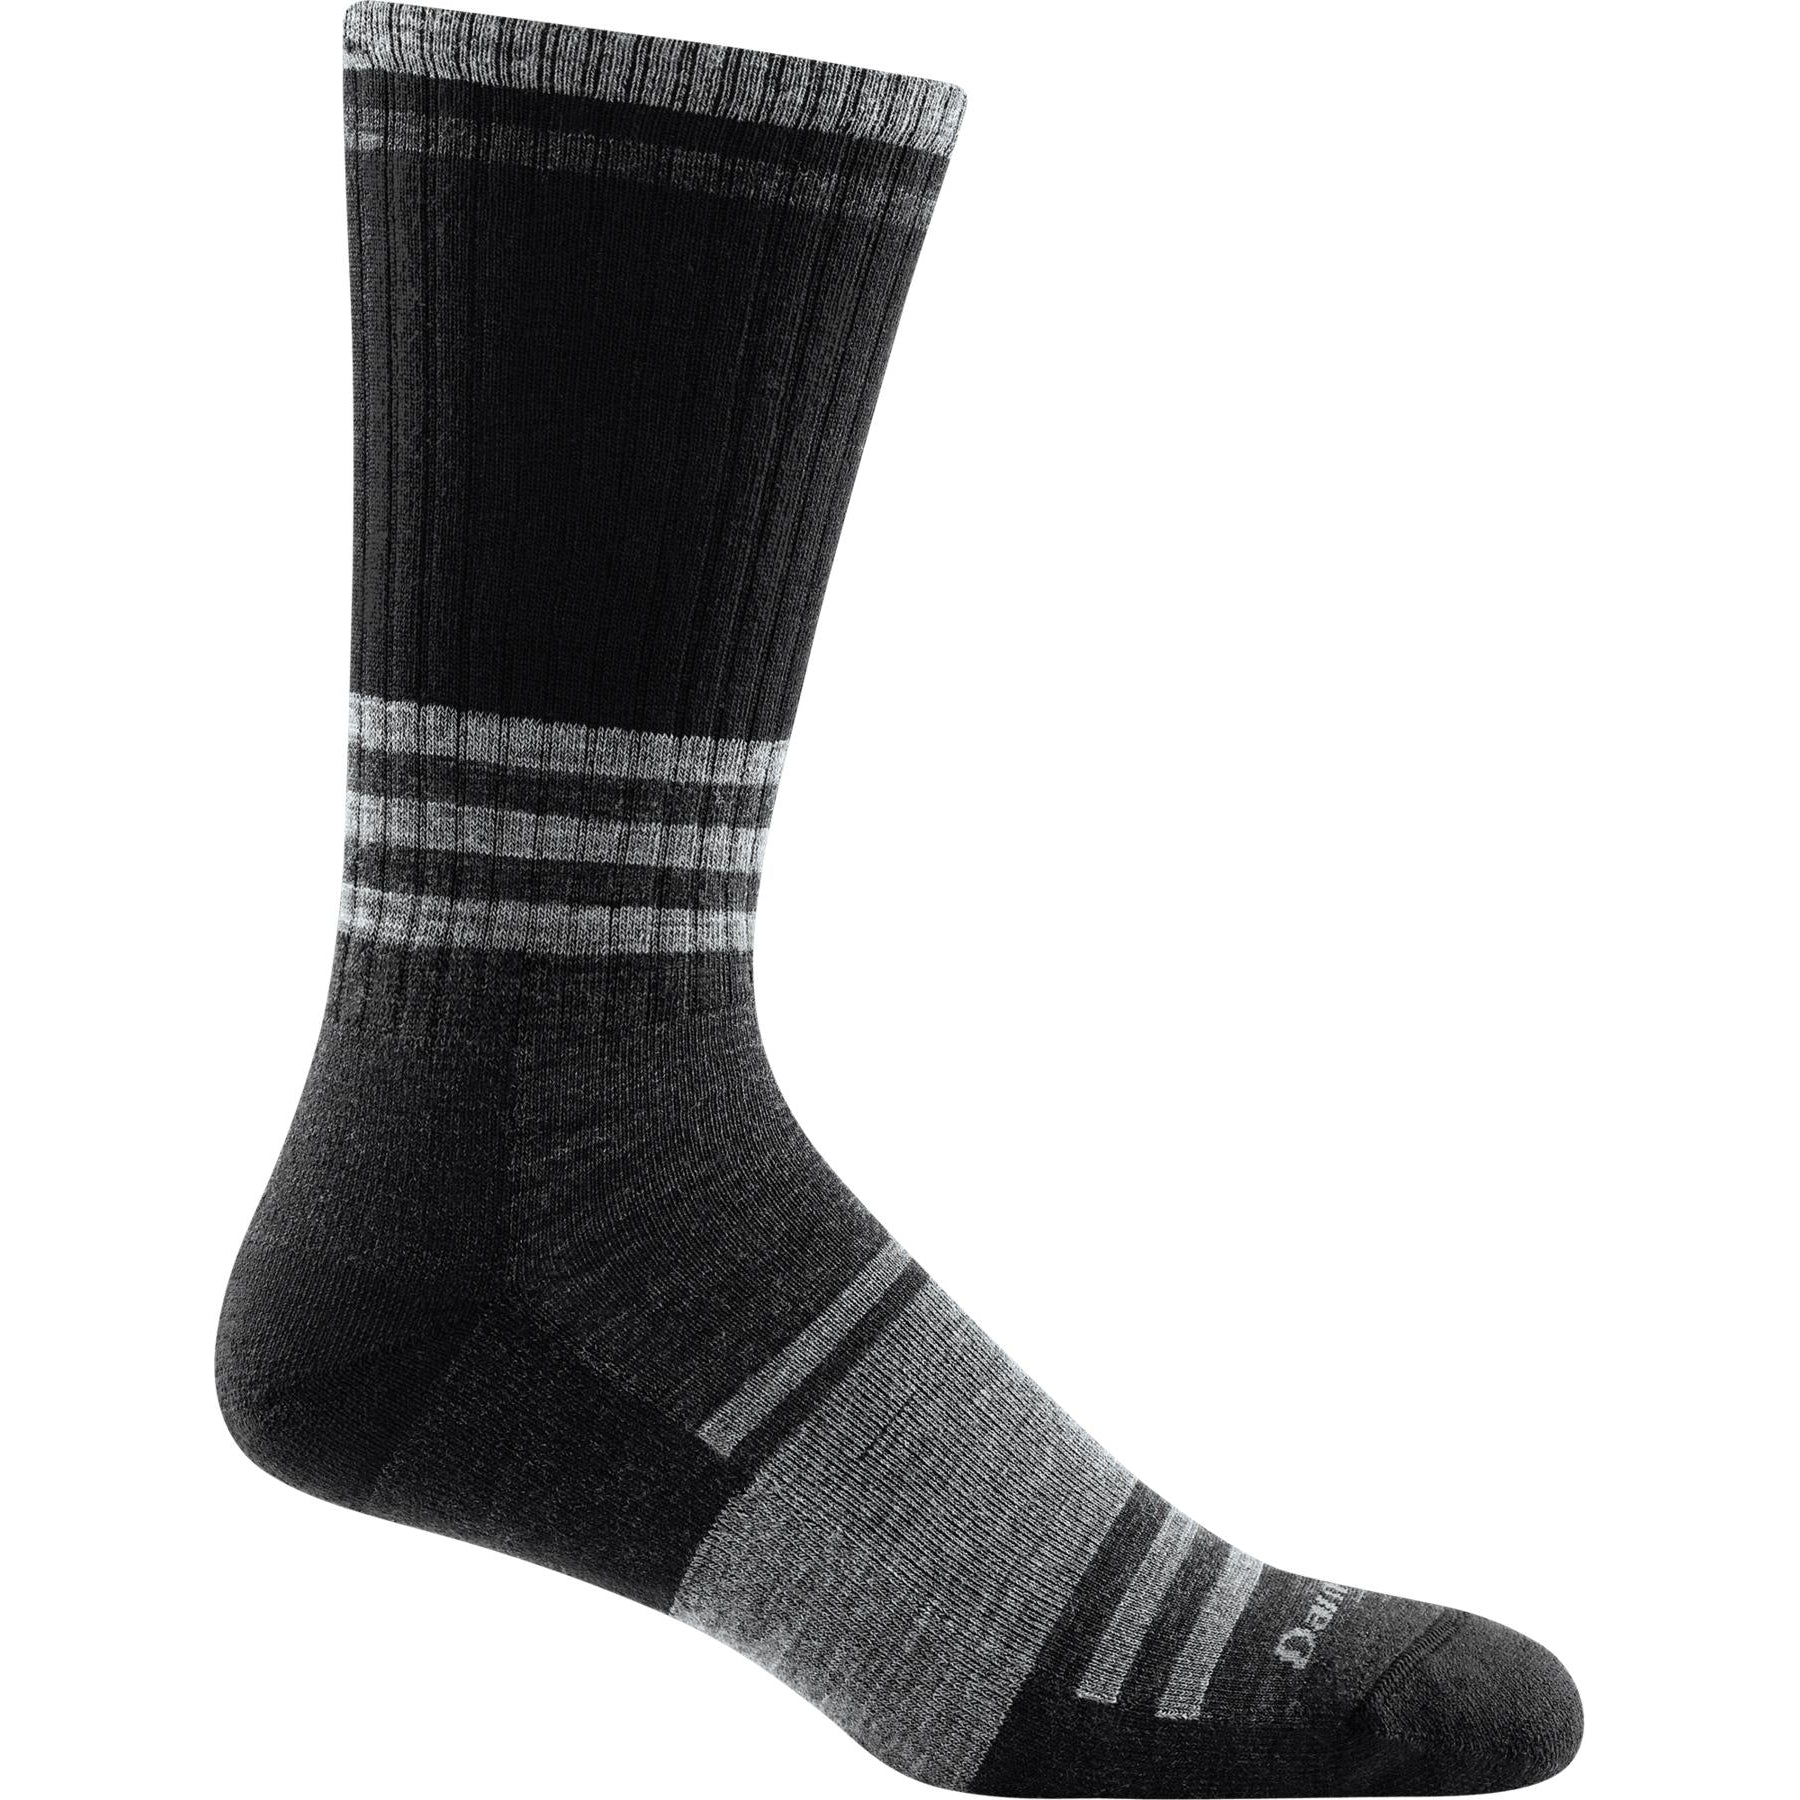 SPUR SOCK-Socks-DARN TOUGH-SMALL-CHARCOAL-Coriander